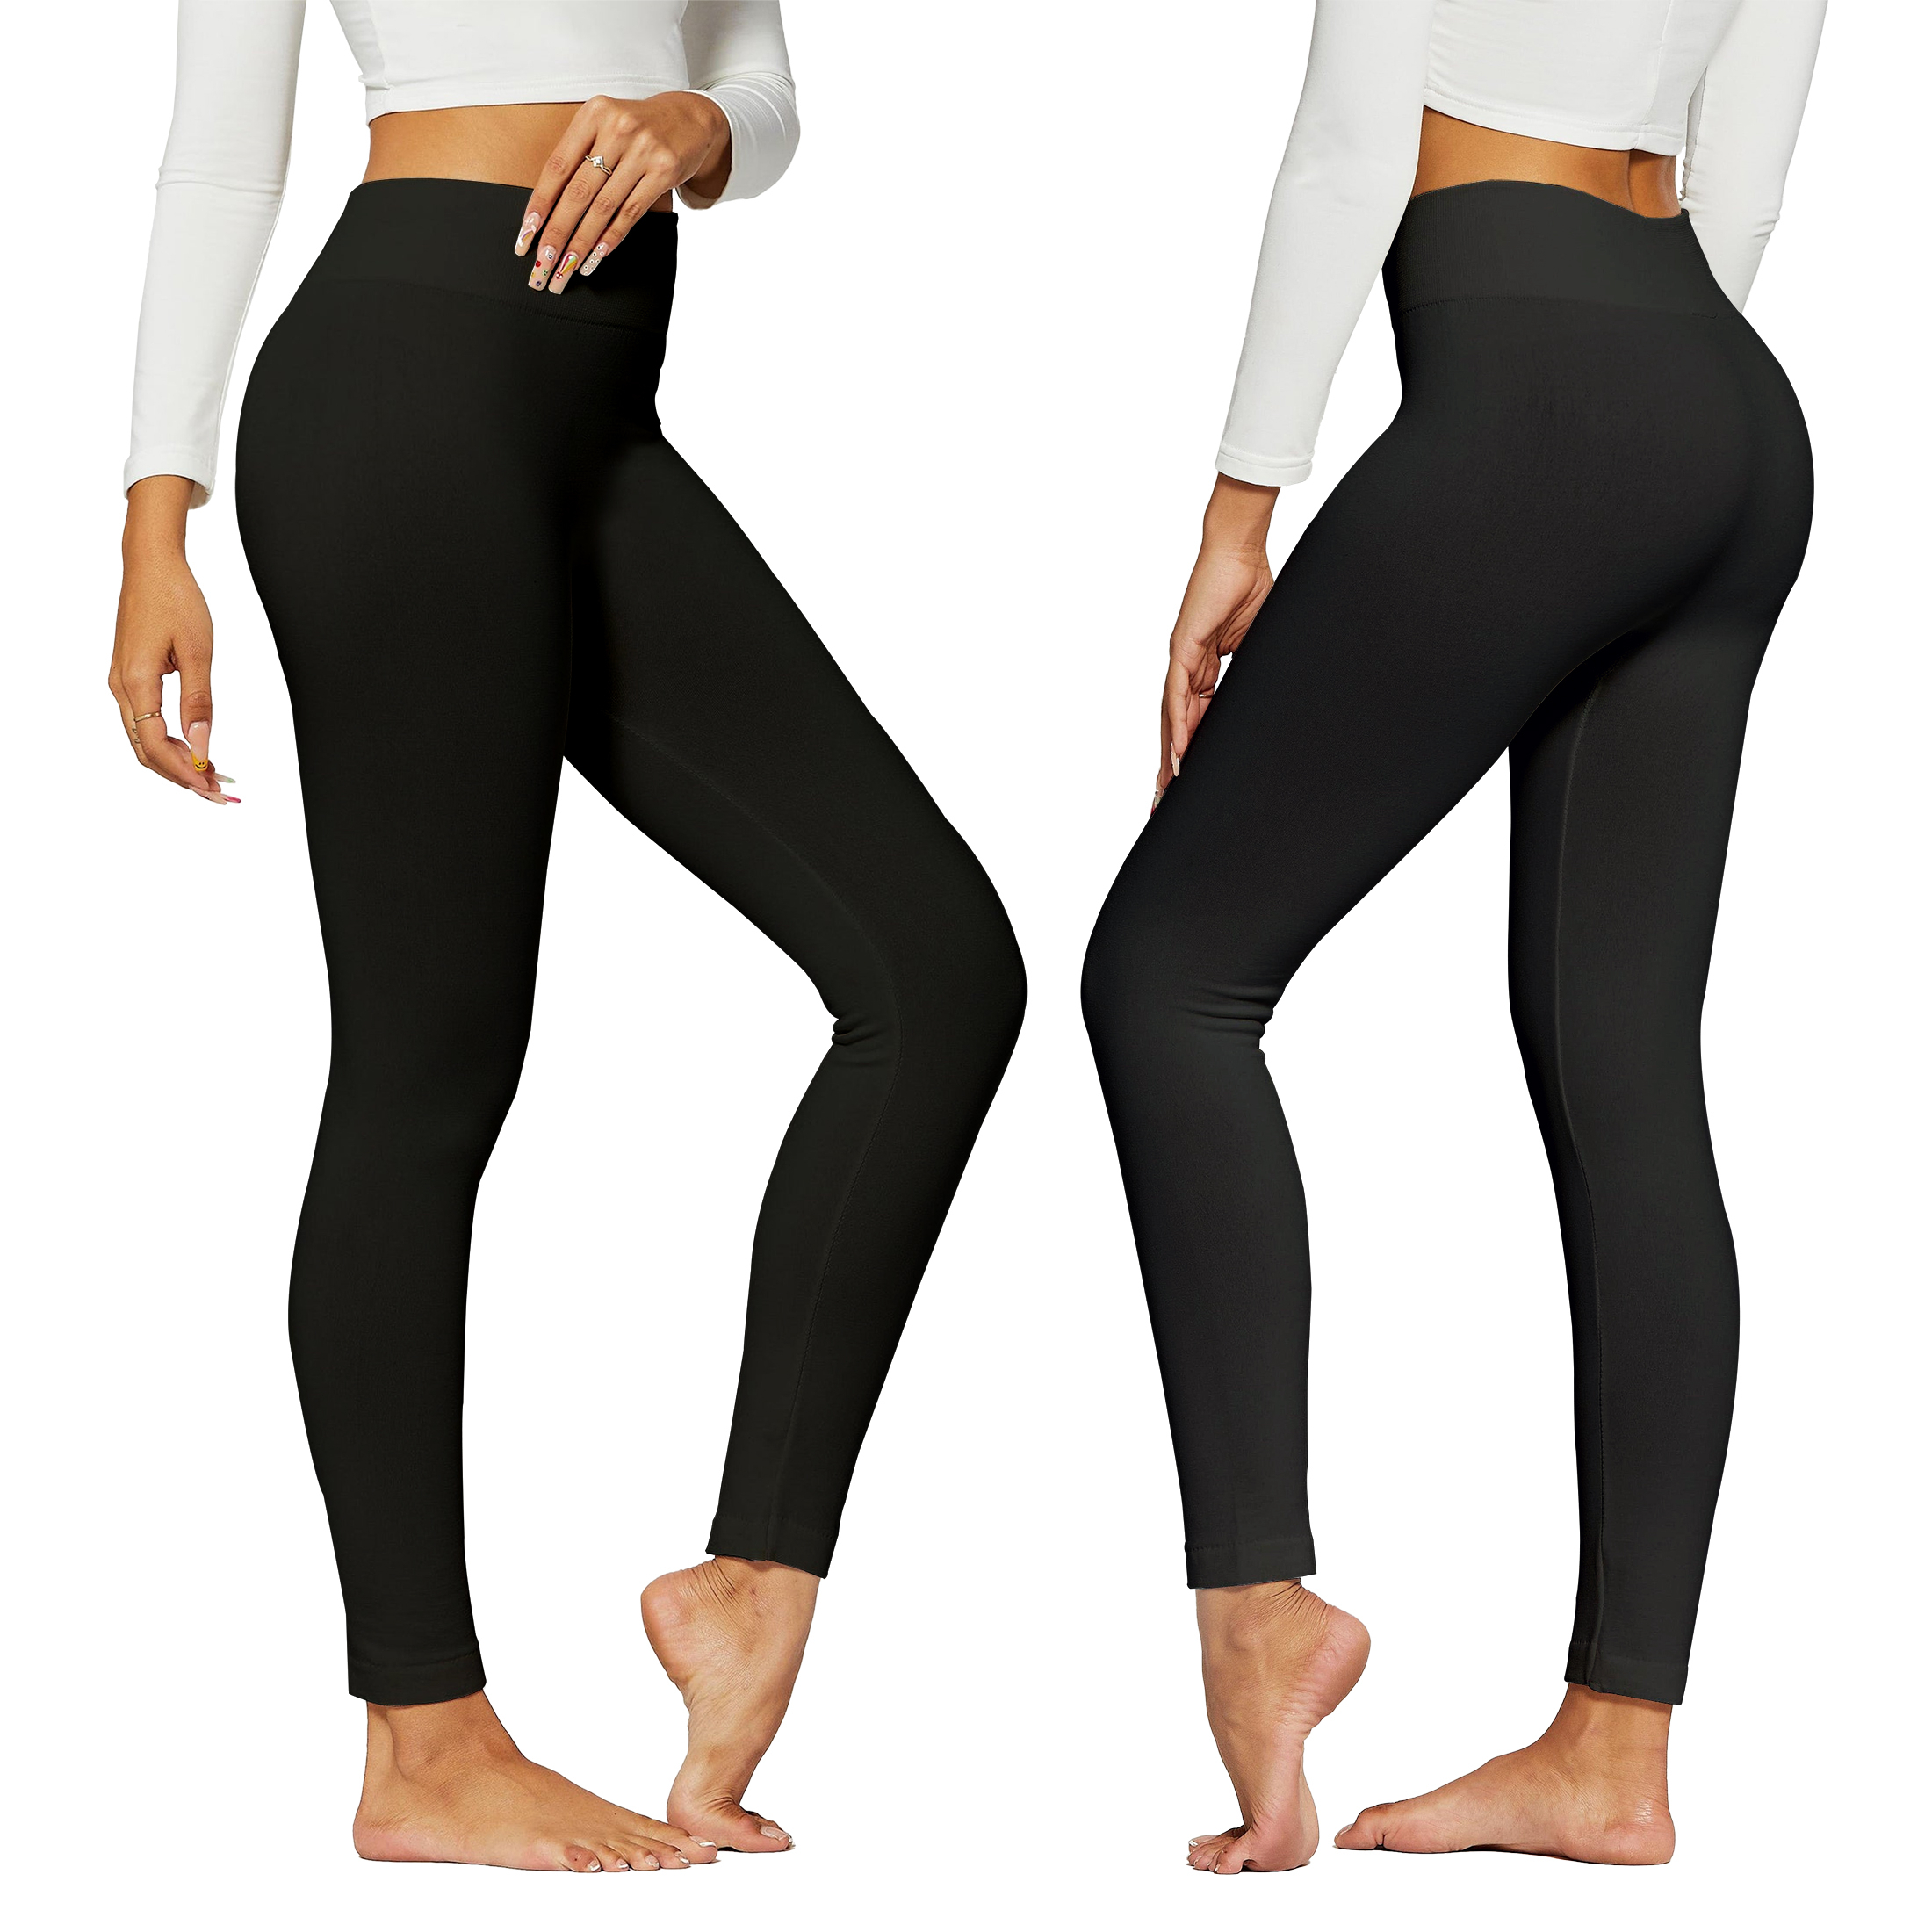 Women's Premium Quality High-Waist Fleece Lined Leggings (Plus Size Available) - Black, Small/Medium